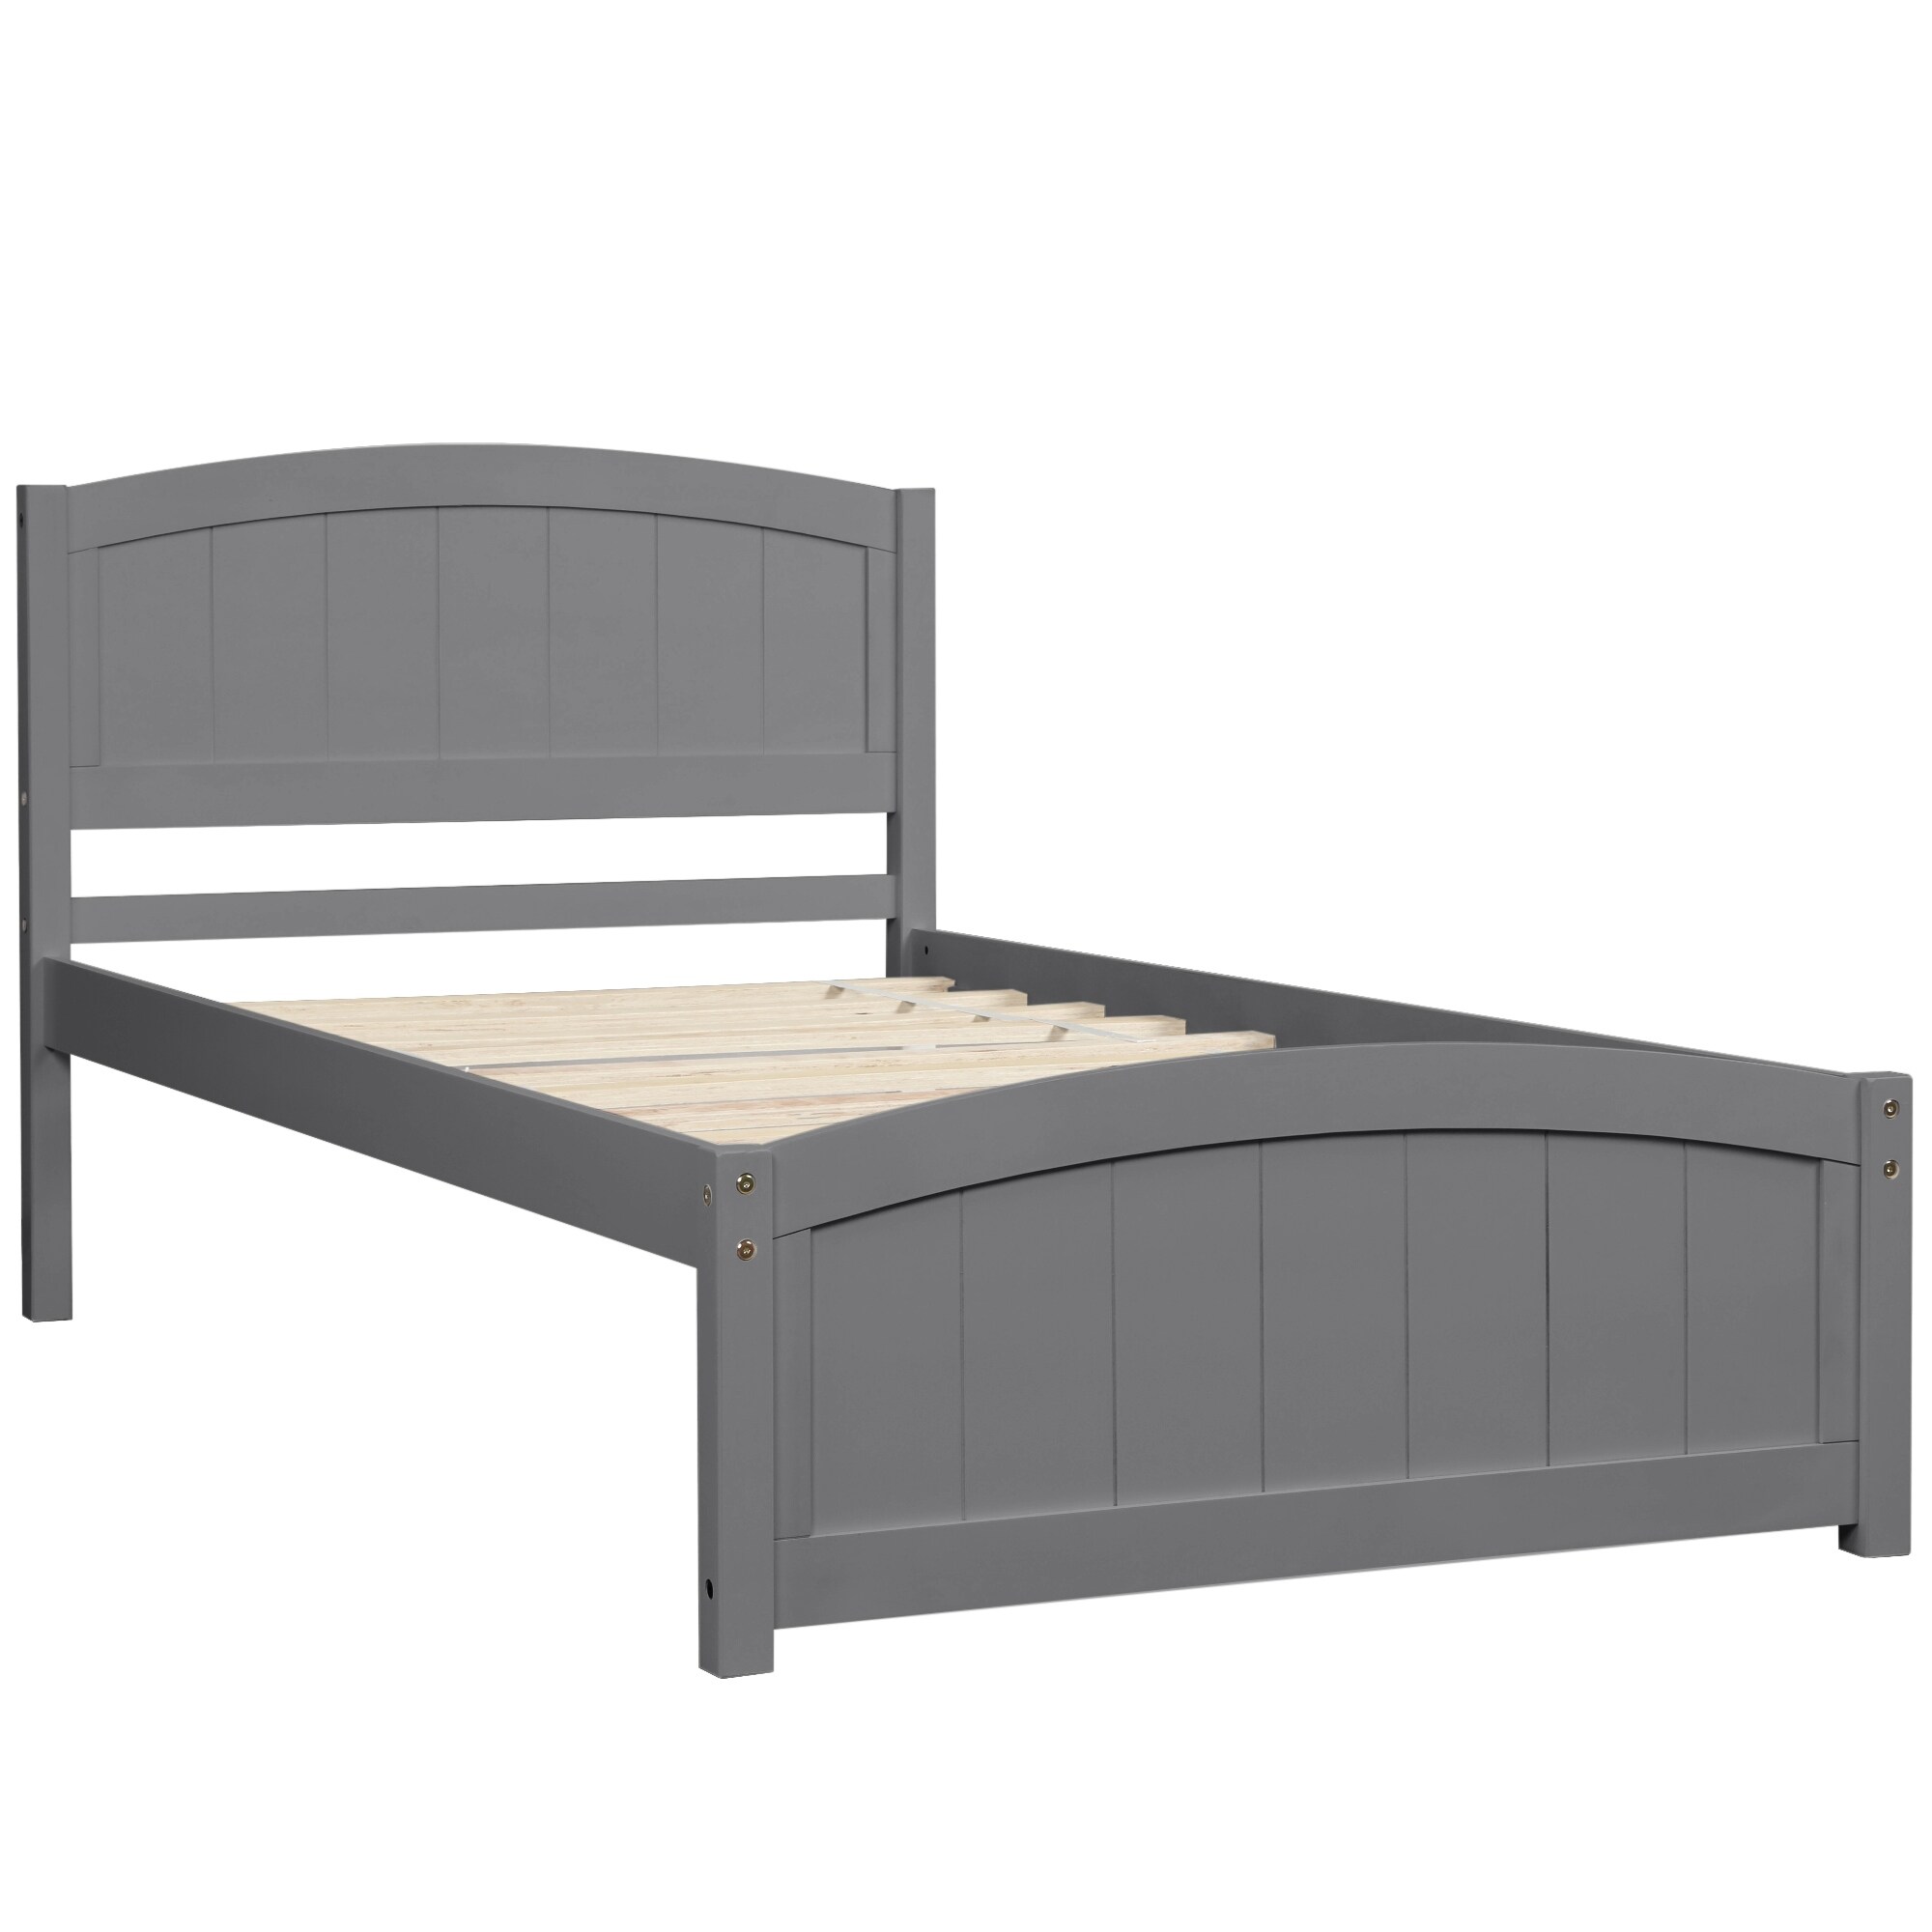 Twin Size Wood Platform Bed With Headboard  Footboard